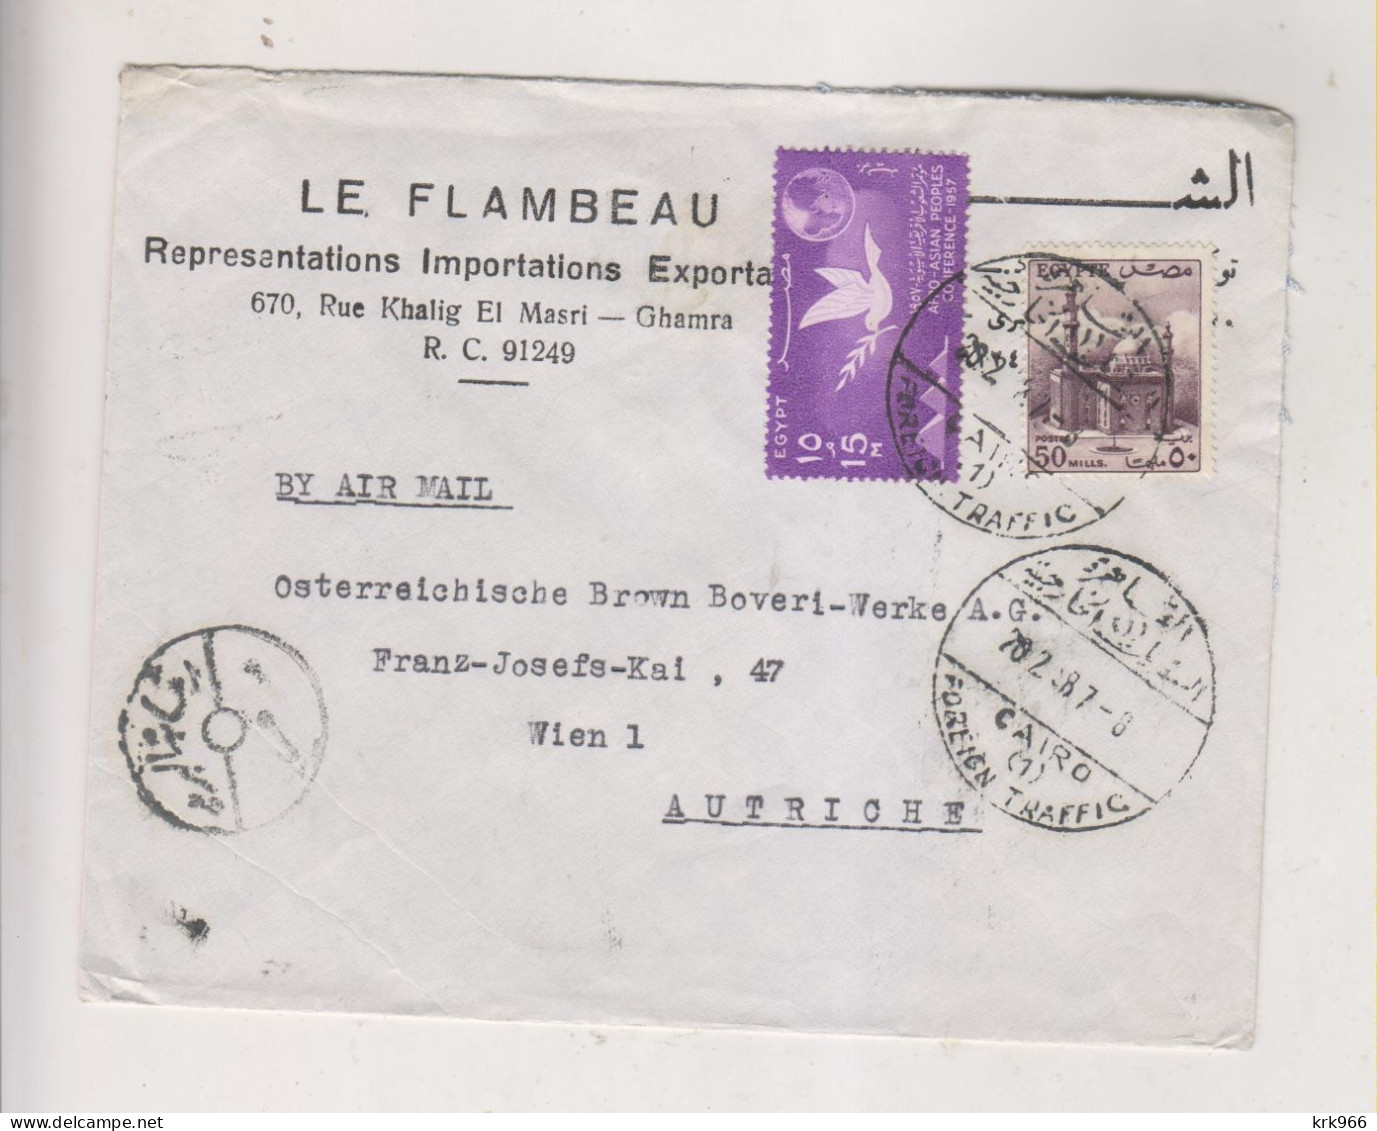 EGYPT CAIRO 1958  Airmail Cover To Austria - Airmail